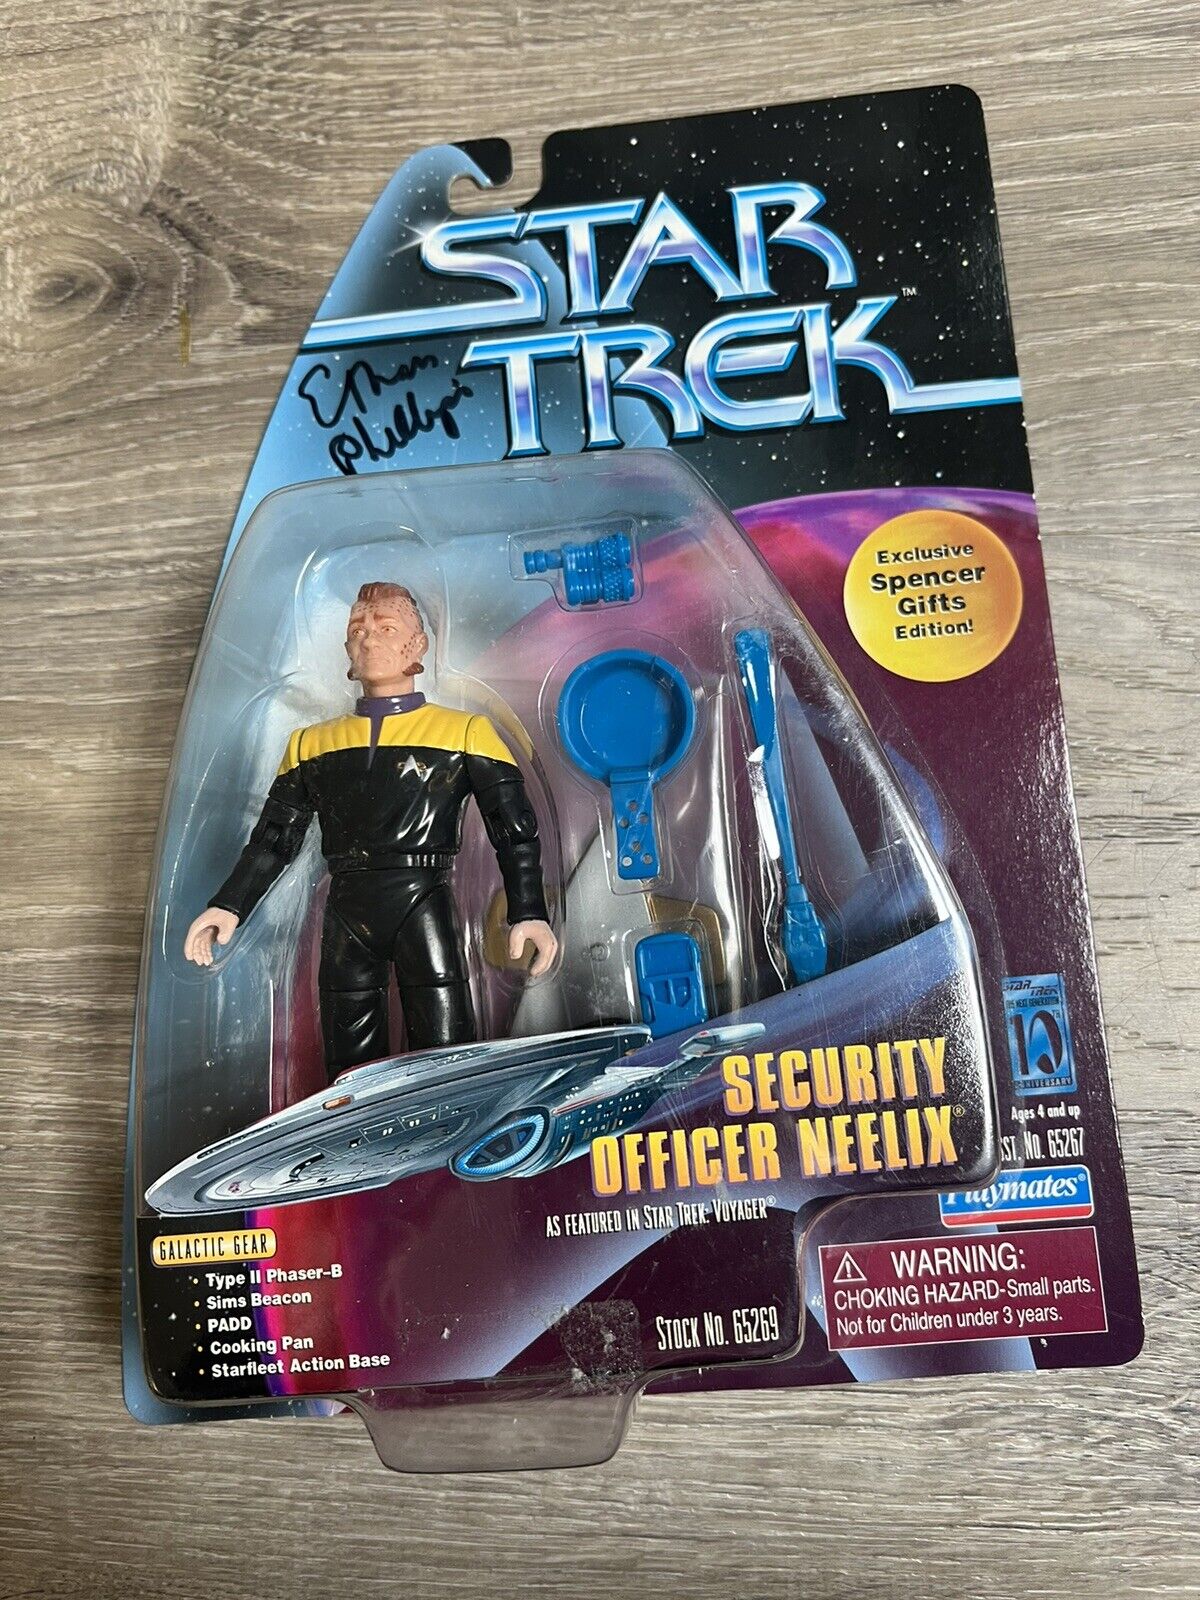 ethan phillips autograph Star Trek Security Officer Neelix Figure Spencer’s